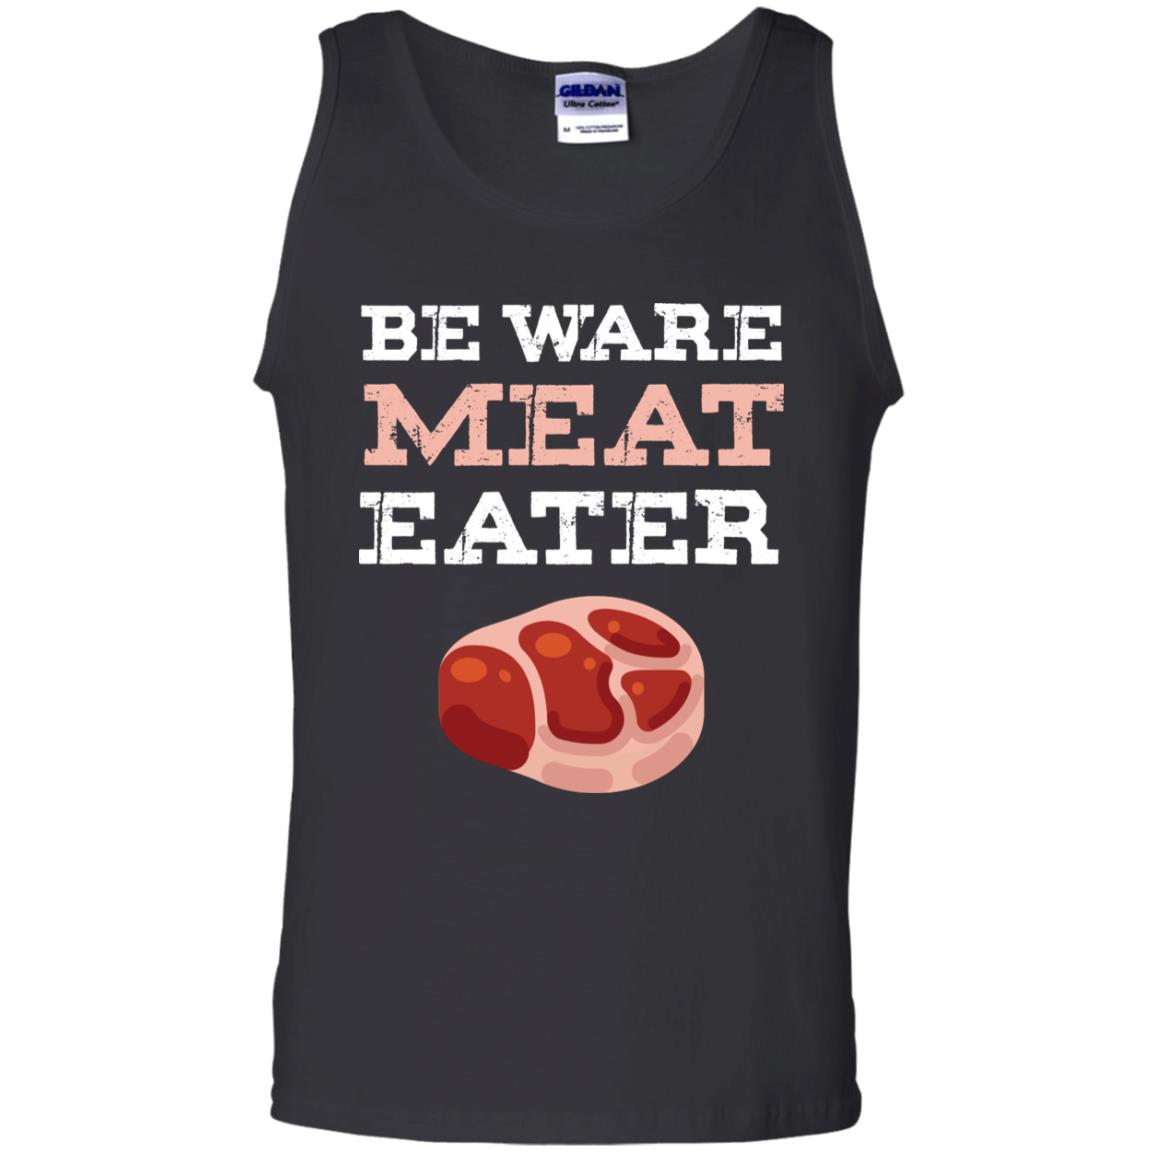 Be Ware Meat Eater Shirt= G220 Gildan 100% Cotton Tank Top